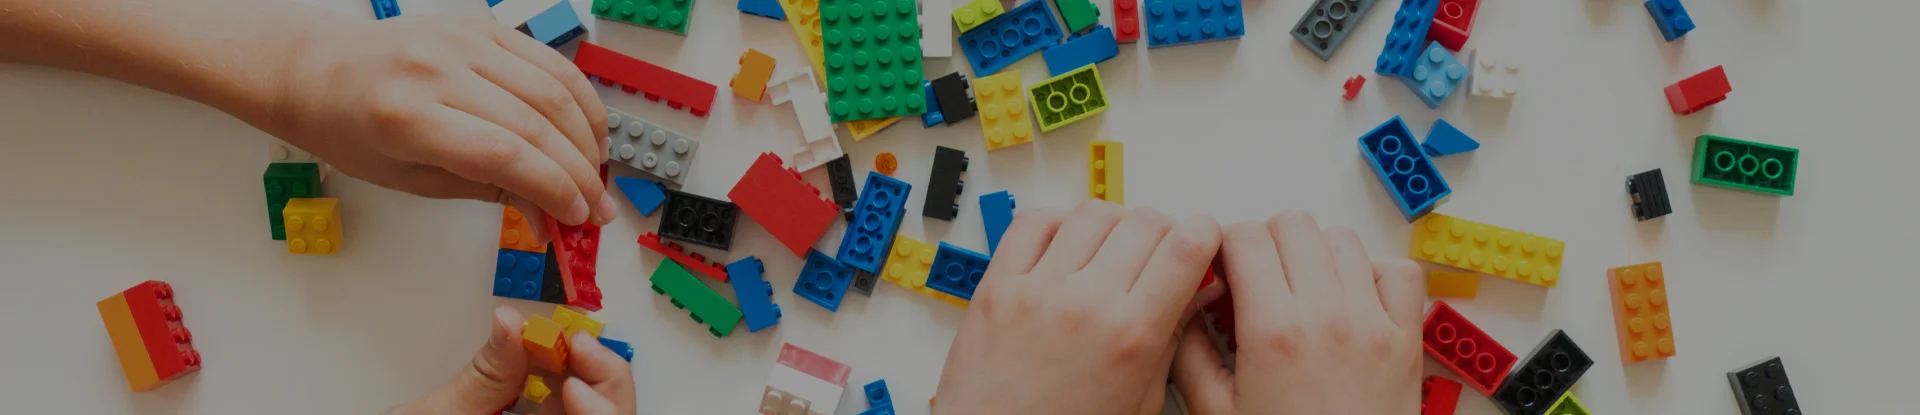 Acea Ambiente e i mattoncini Lego